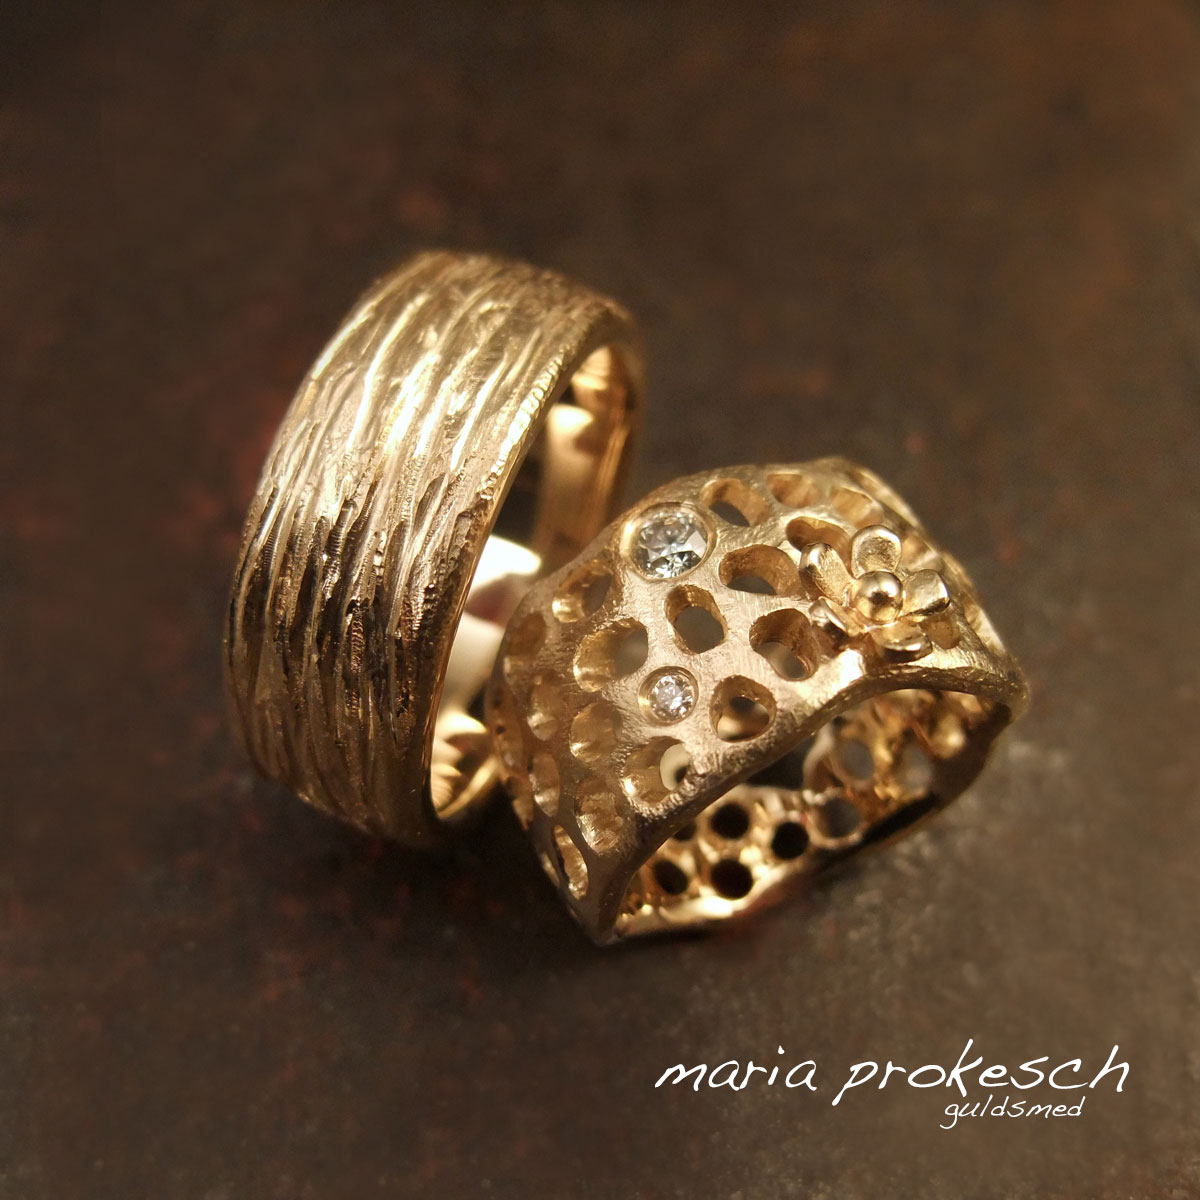 Vielsesringe i guld med blomster og personlige detaljer som gør hendes hulmønster feminin og hans ring maskulin med rustik natur bark overflade.